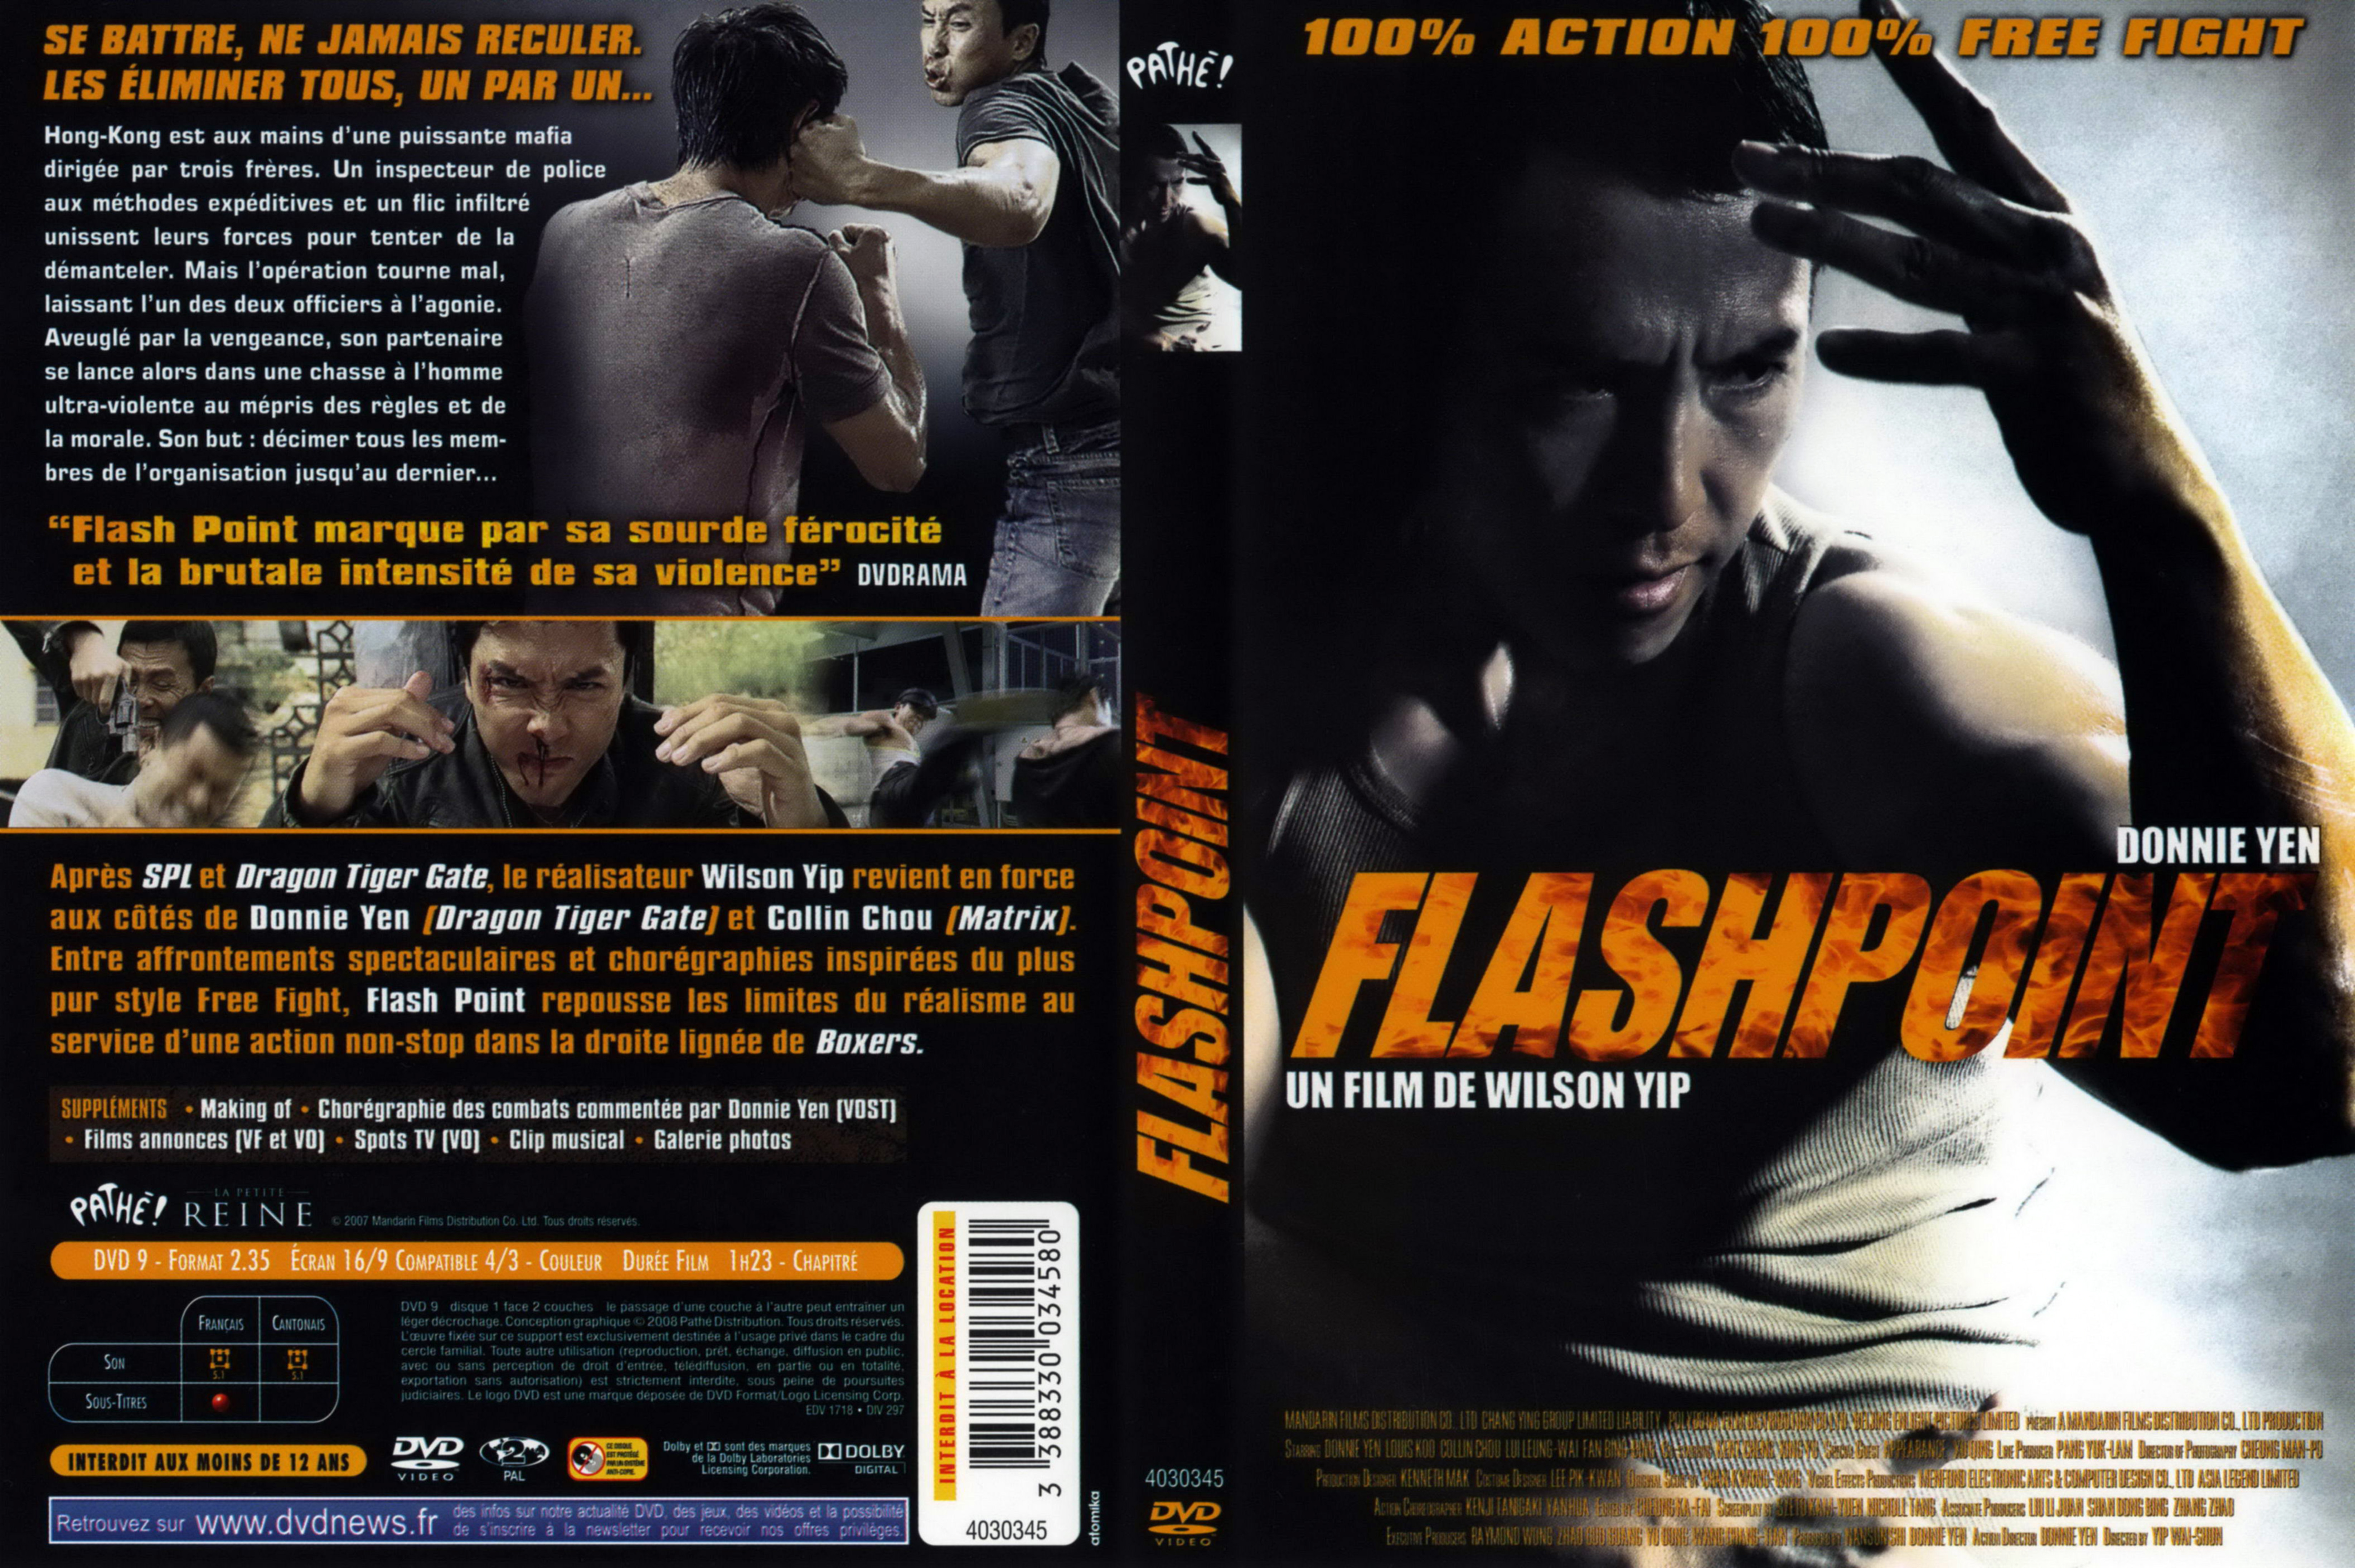 Jaquette DVD Flashpoint